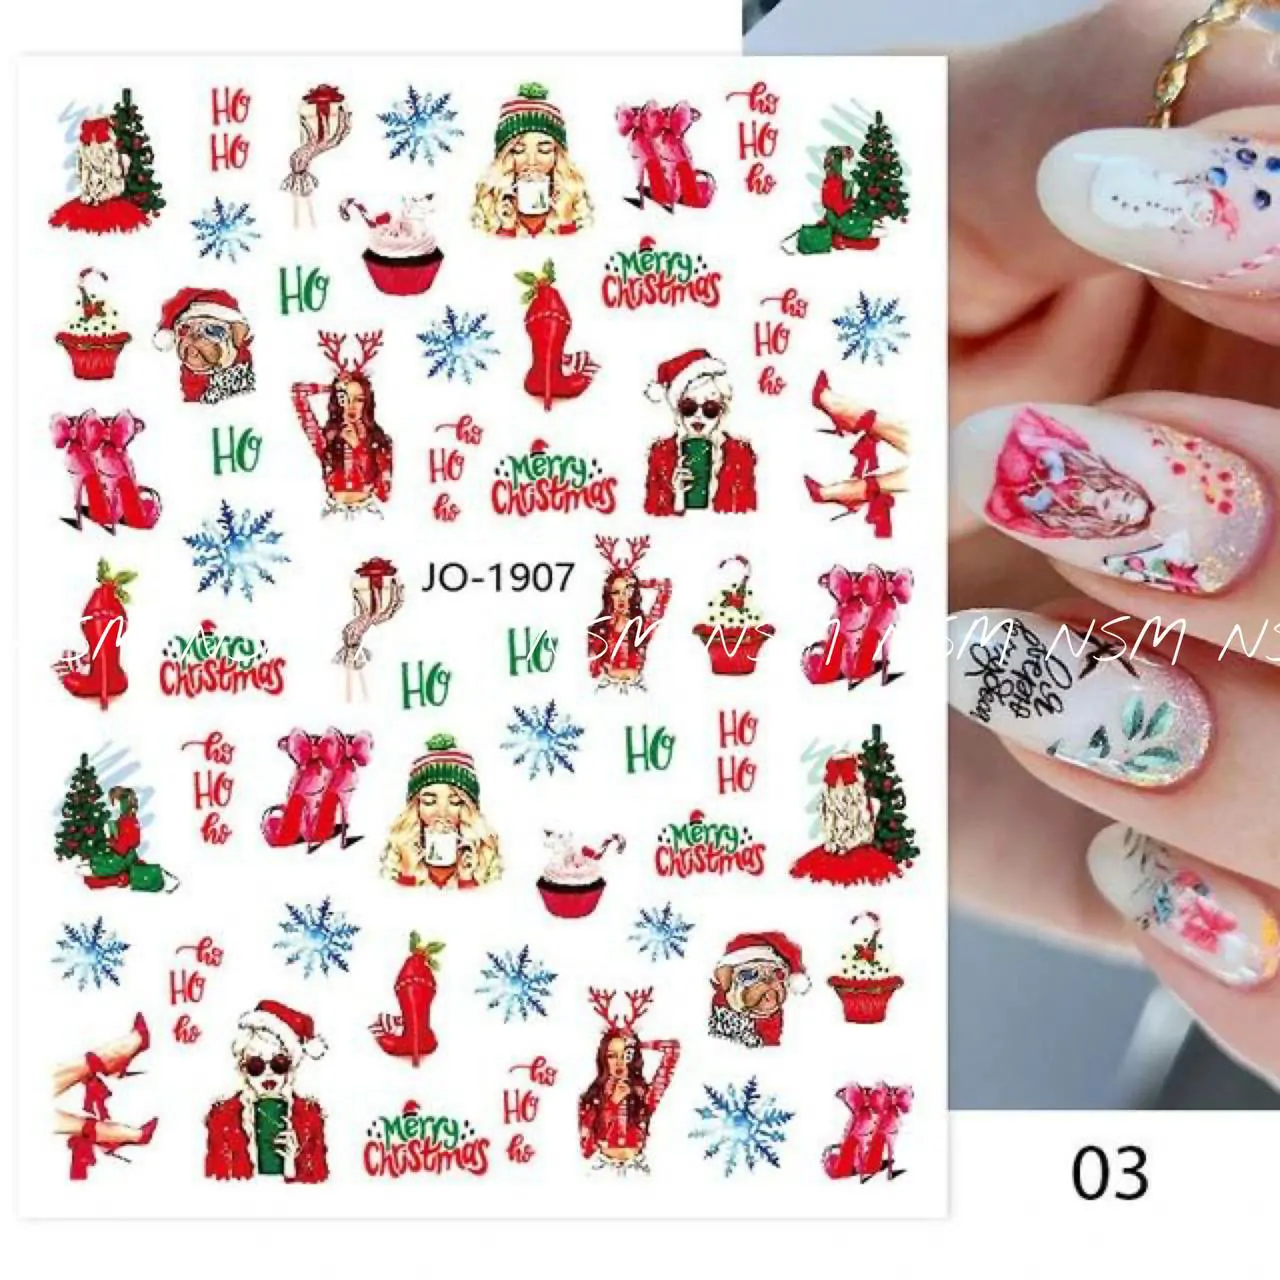 11 Festive Christmas Nails For Short And Medium Nails – Maniology